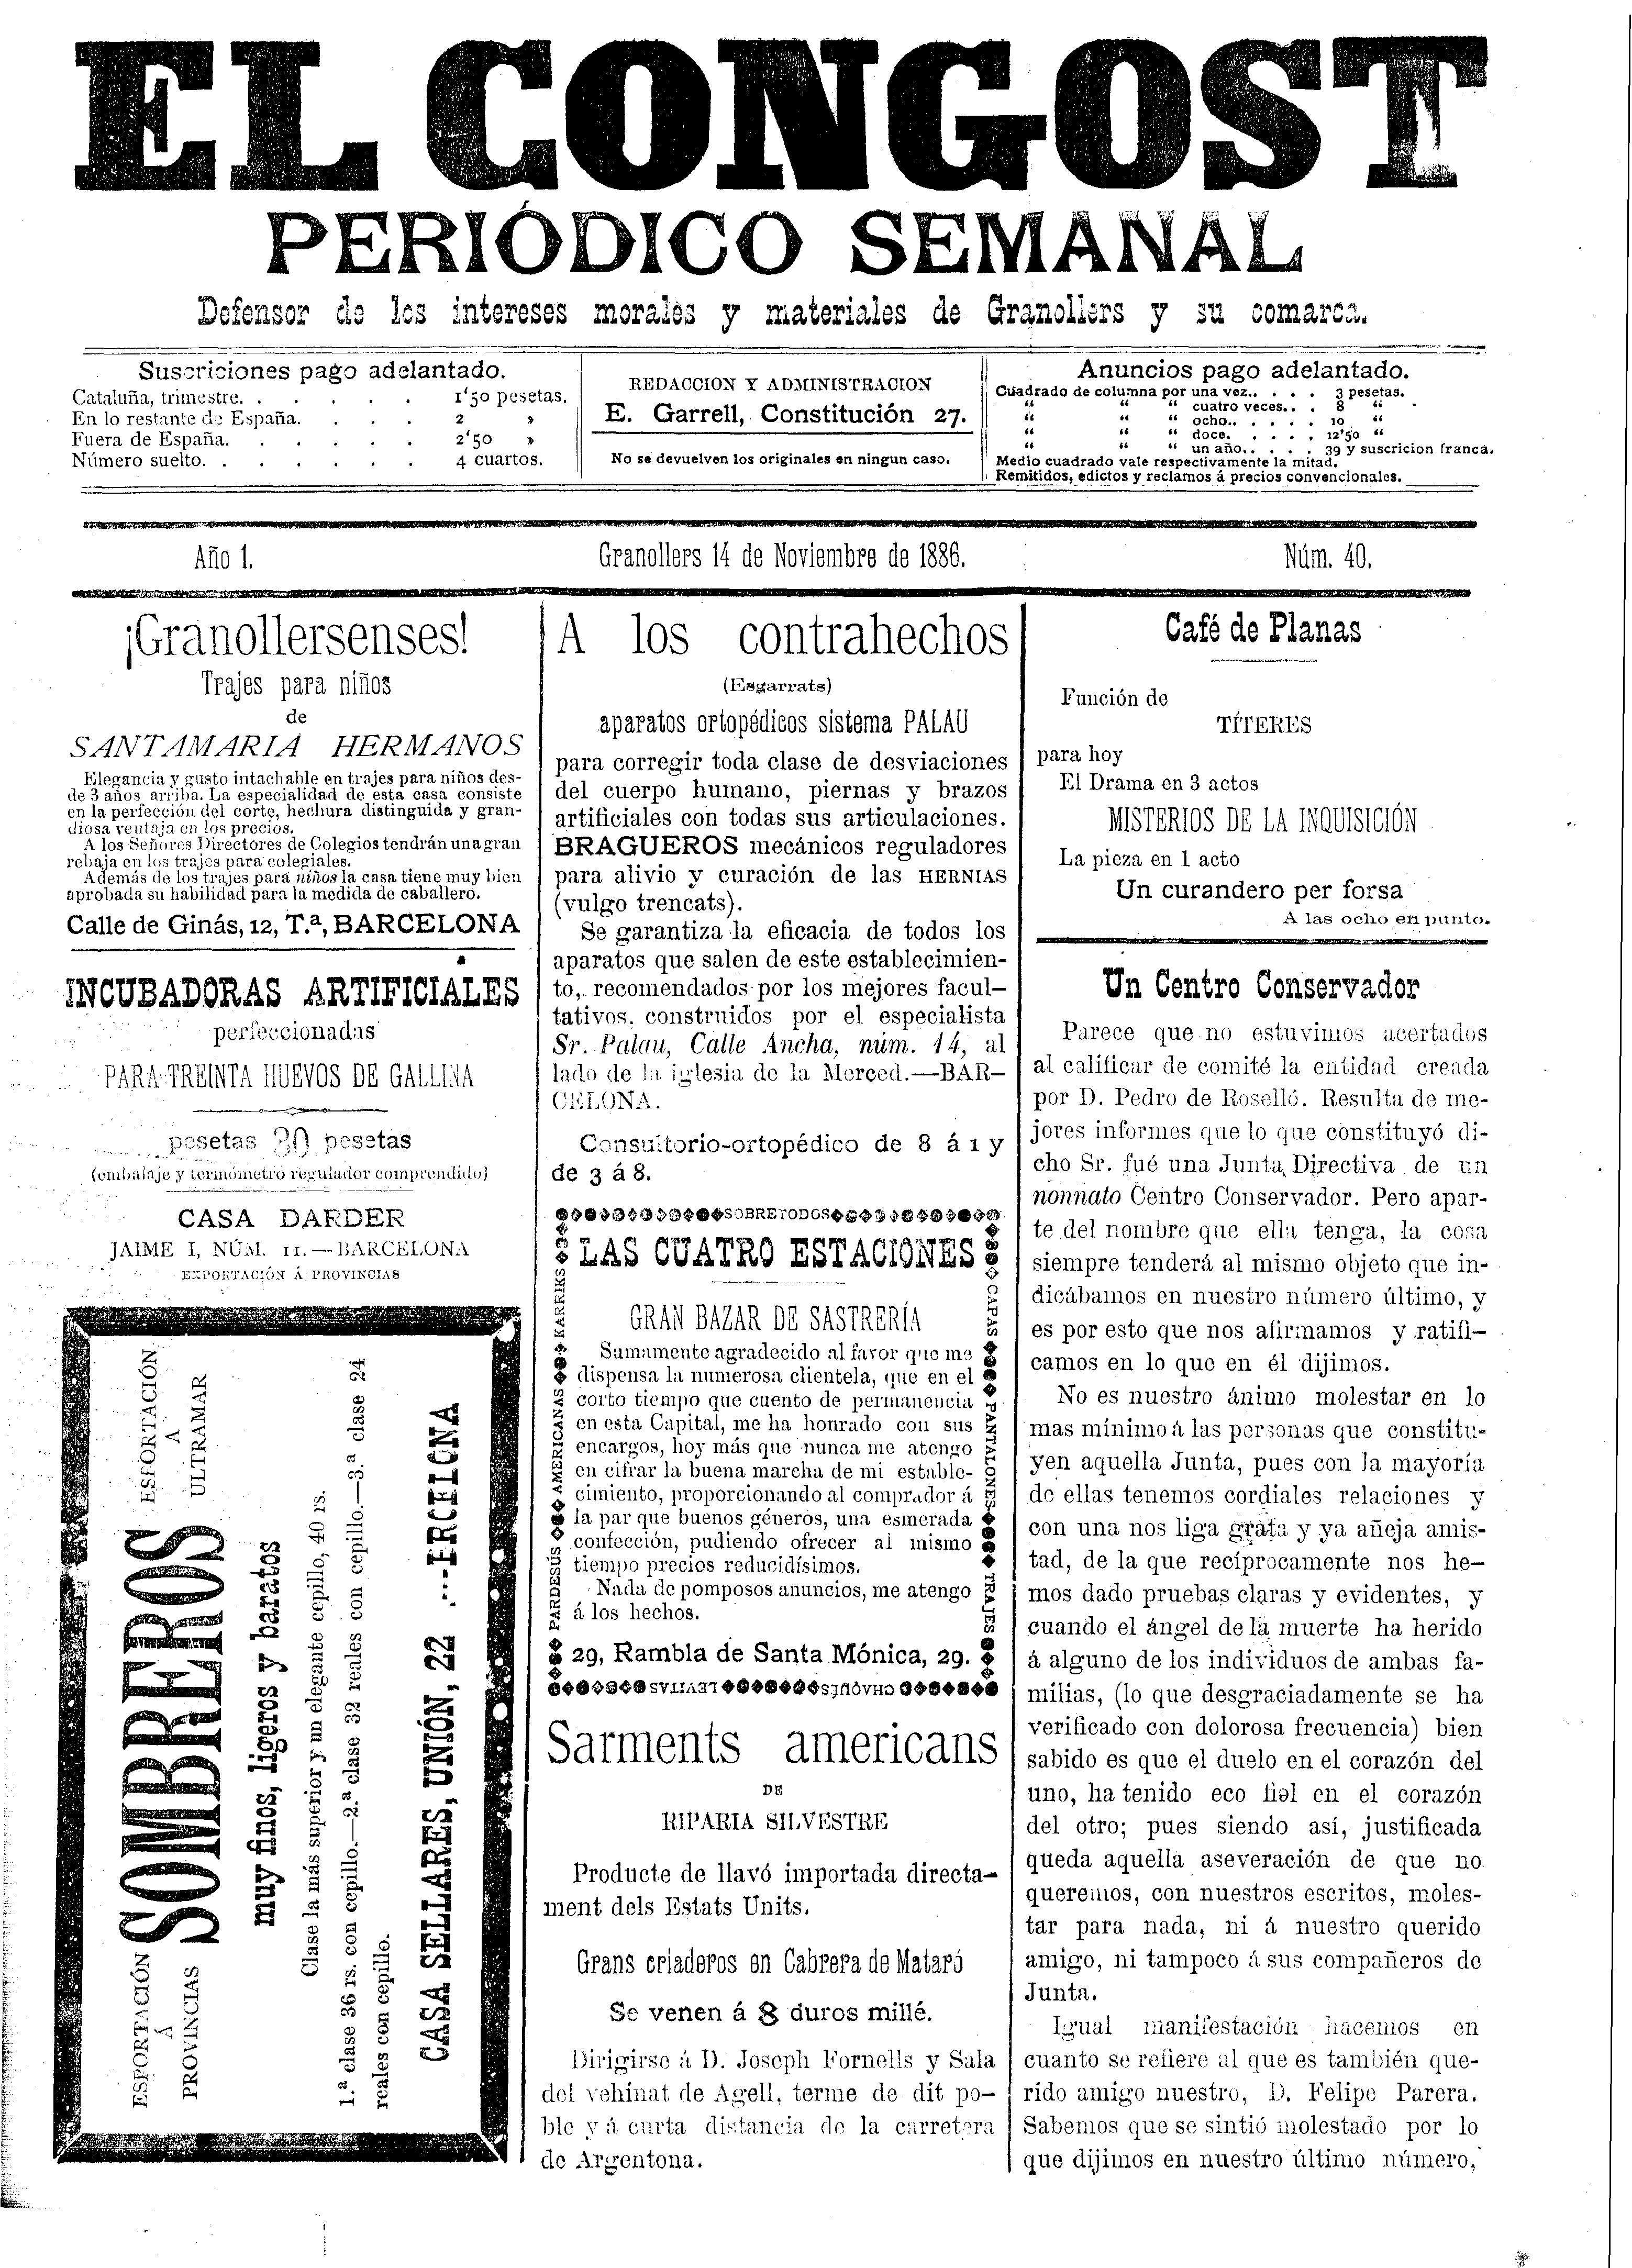 El Congost, 14/11/1886 [Exemplar]